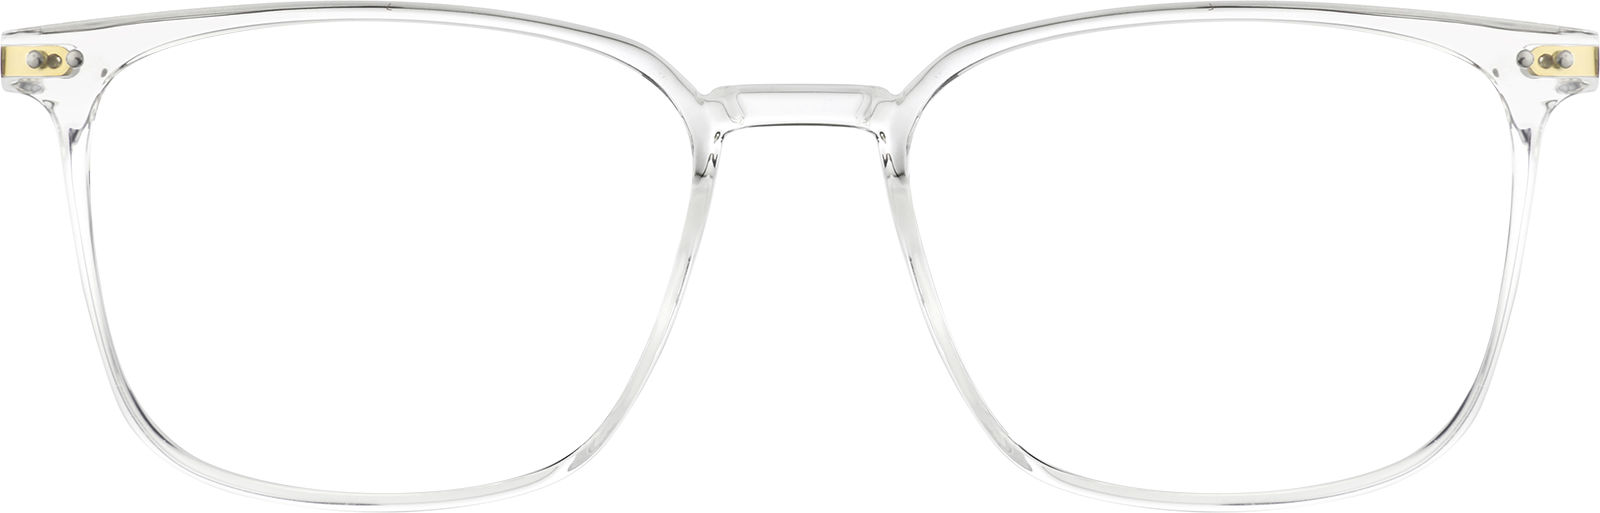 Square Glasseslens frame image